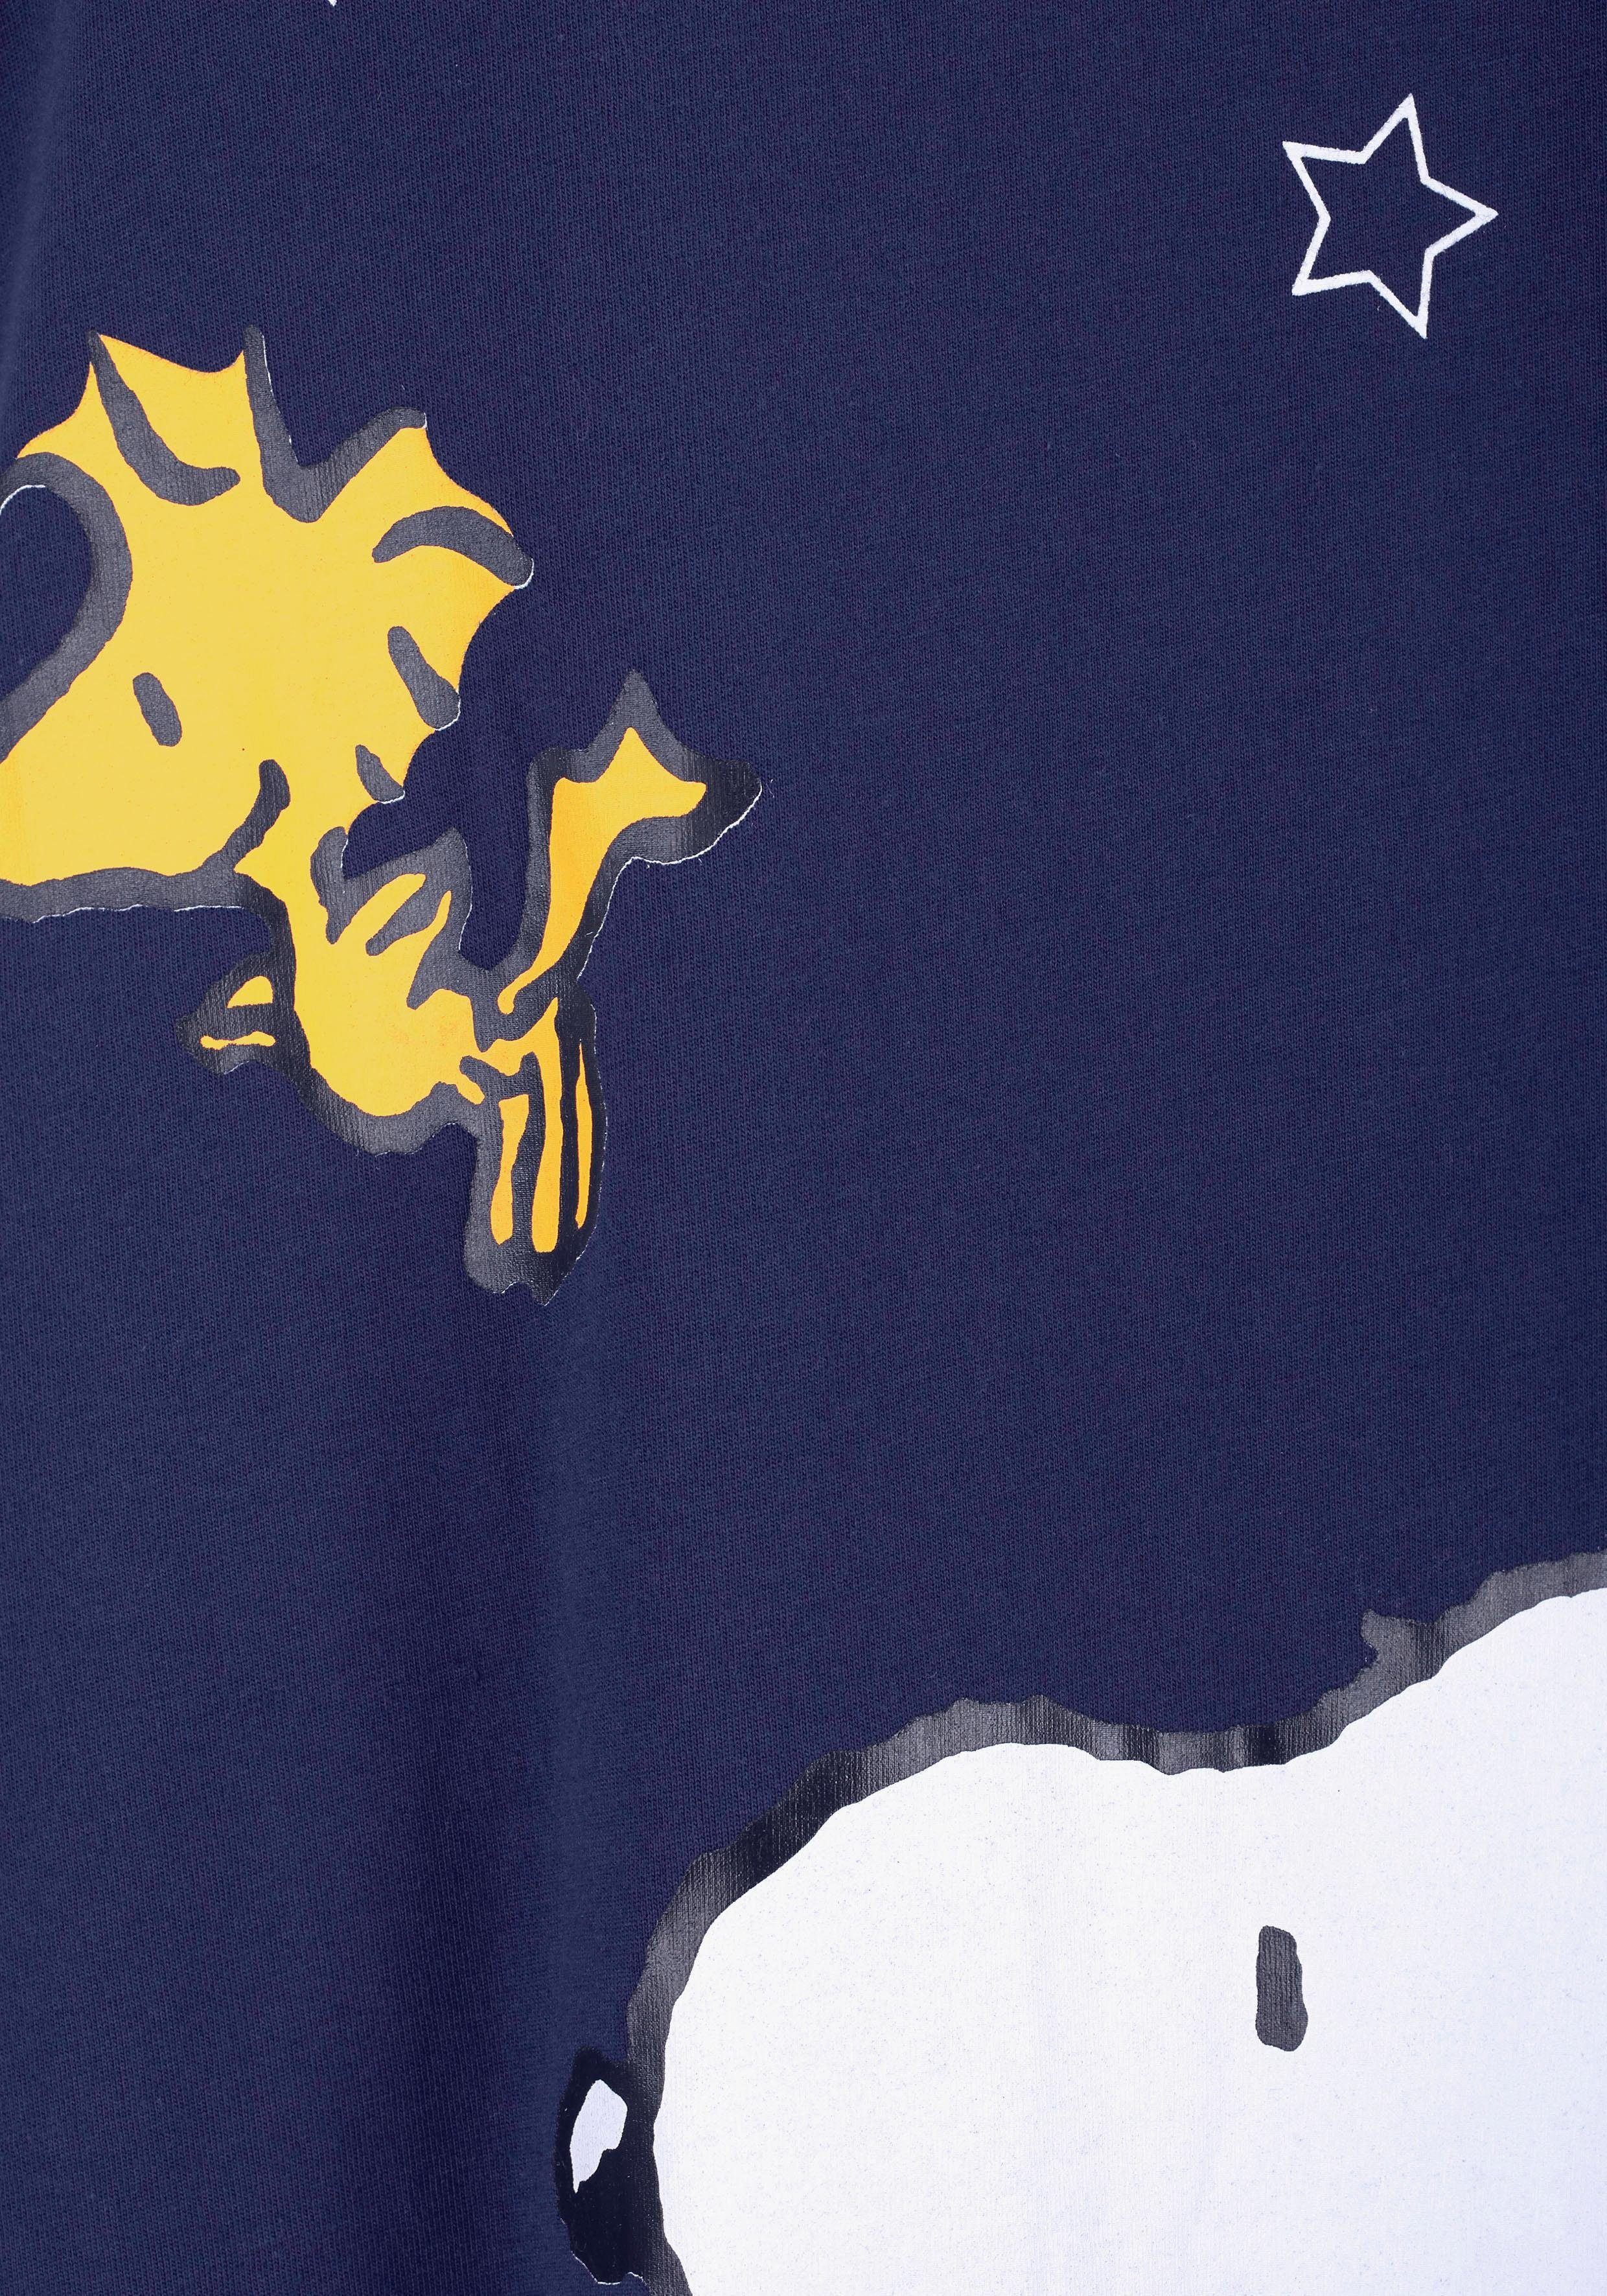 marine in mit PEANUTS Minilänge Snoopy-Print Sleepshirt